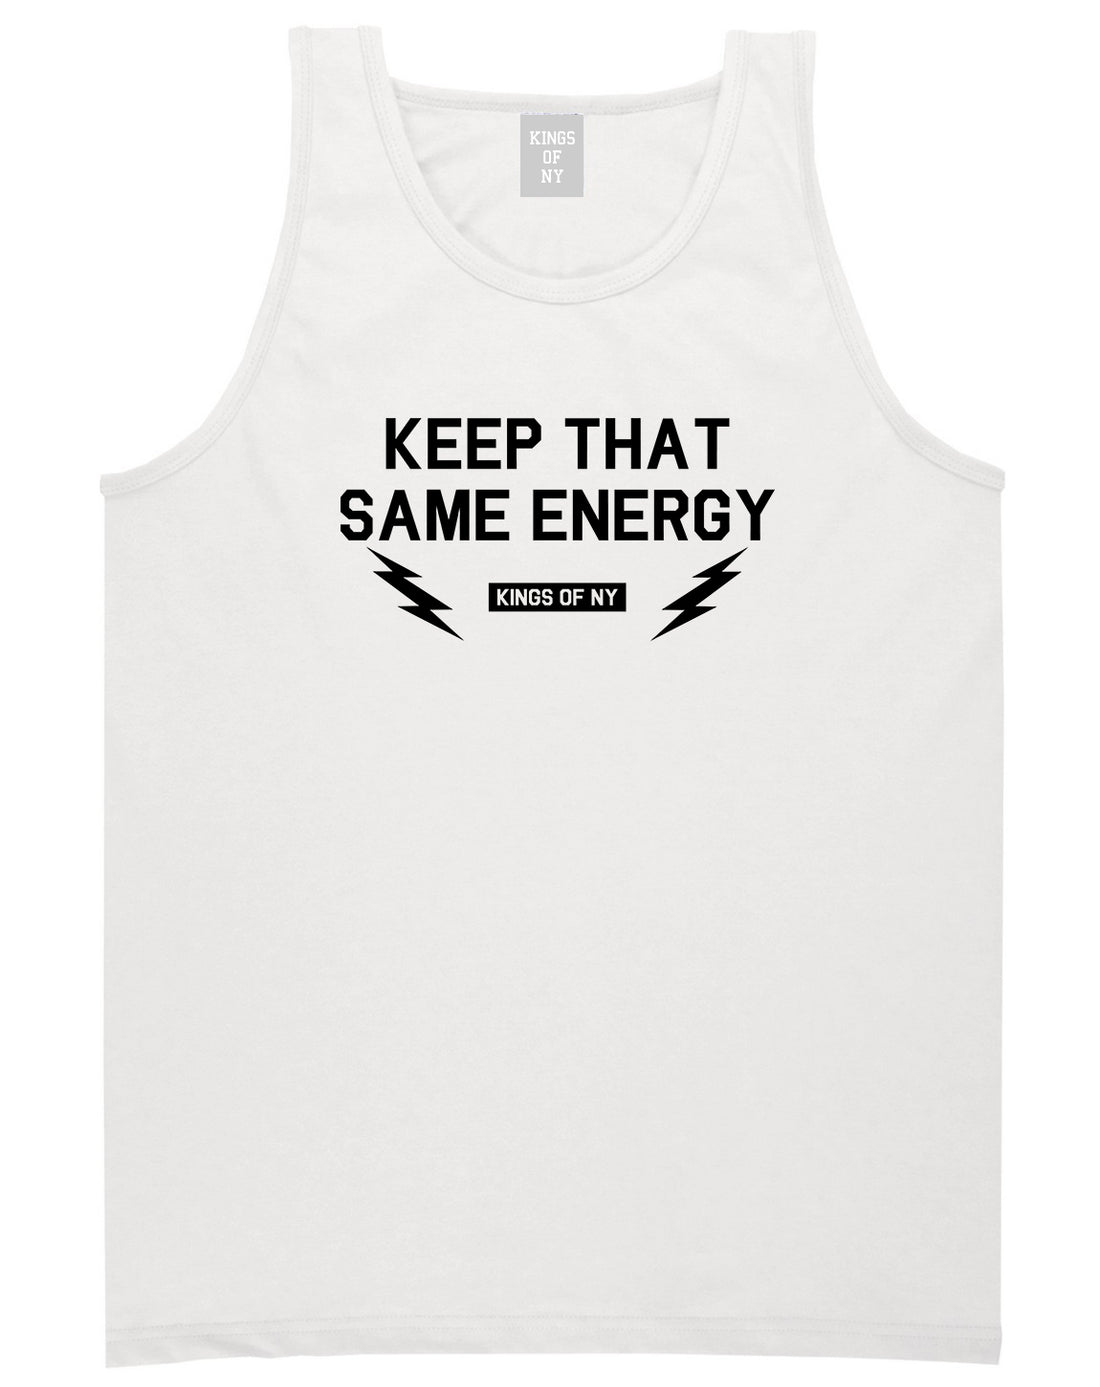 Keep That Same Energy Mens Tank Top Shirt White